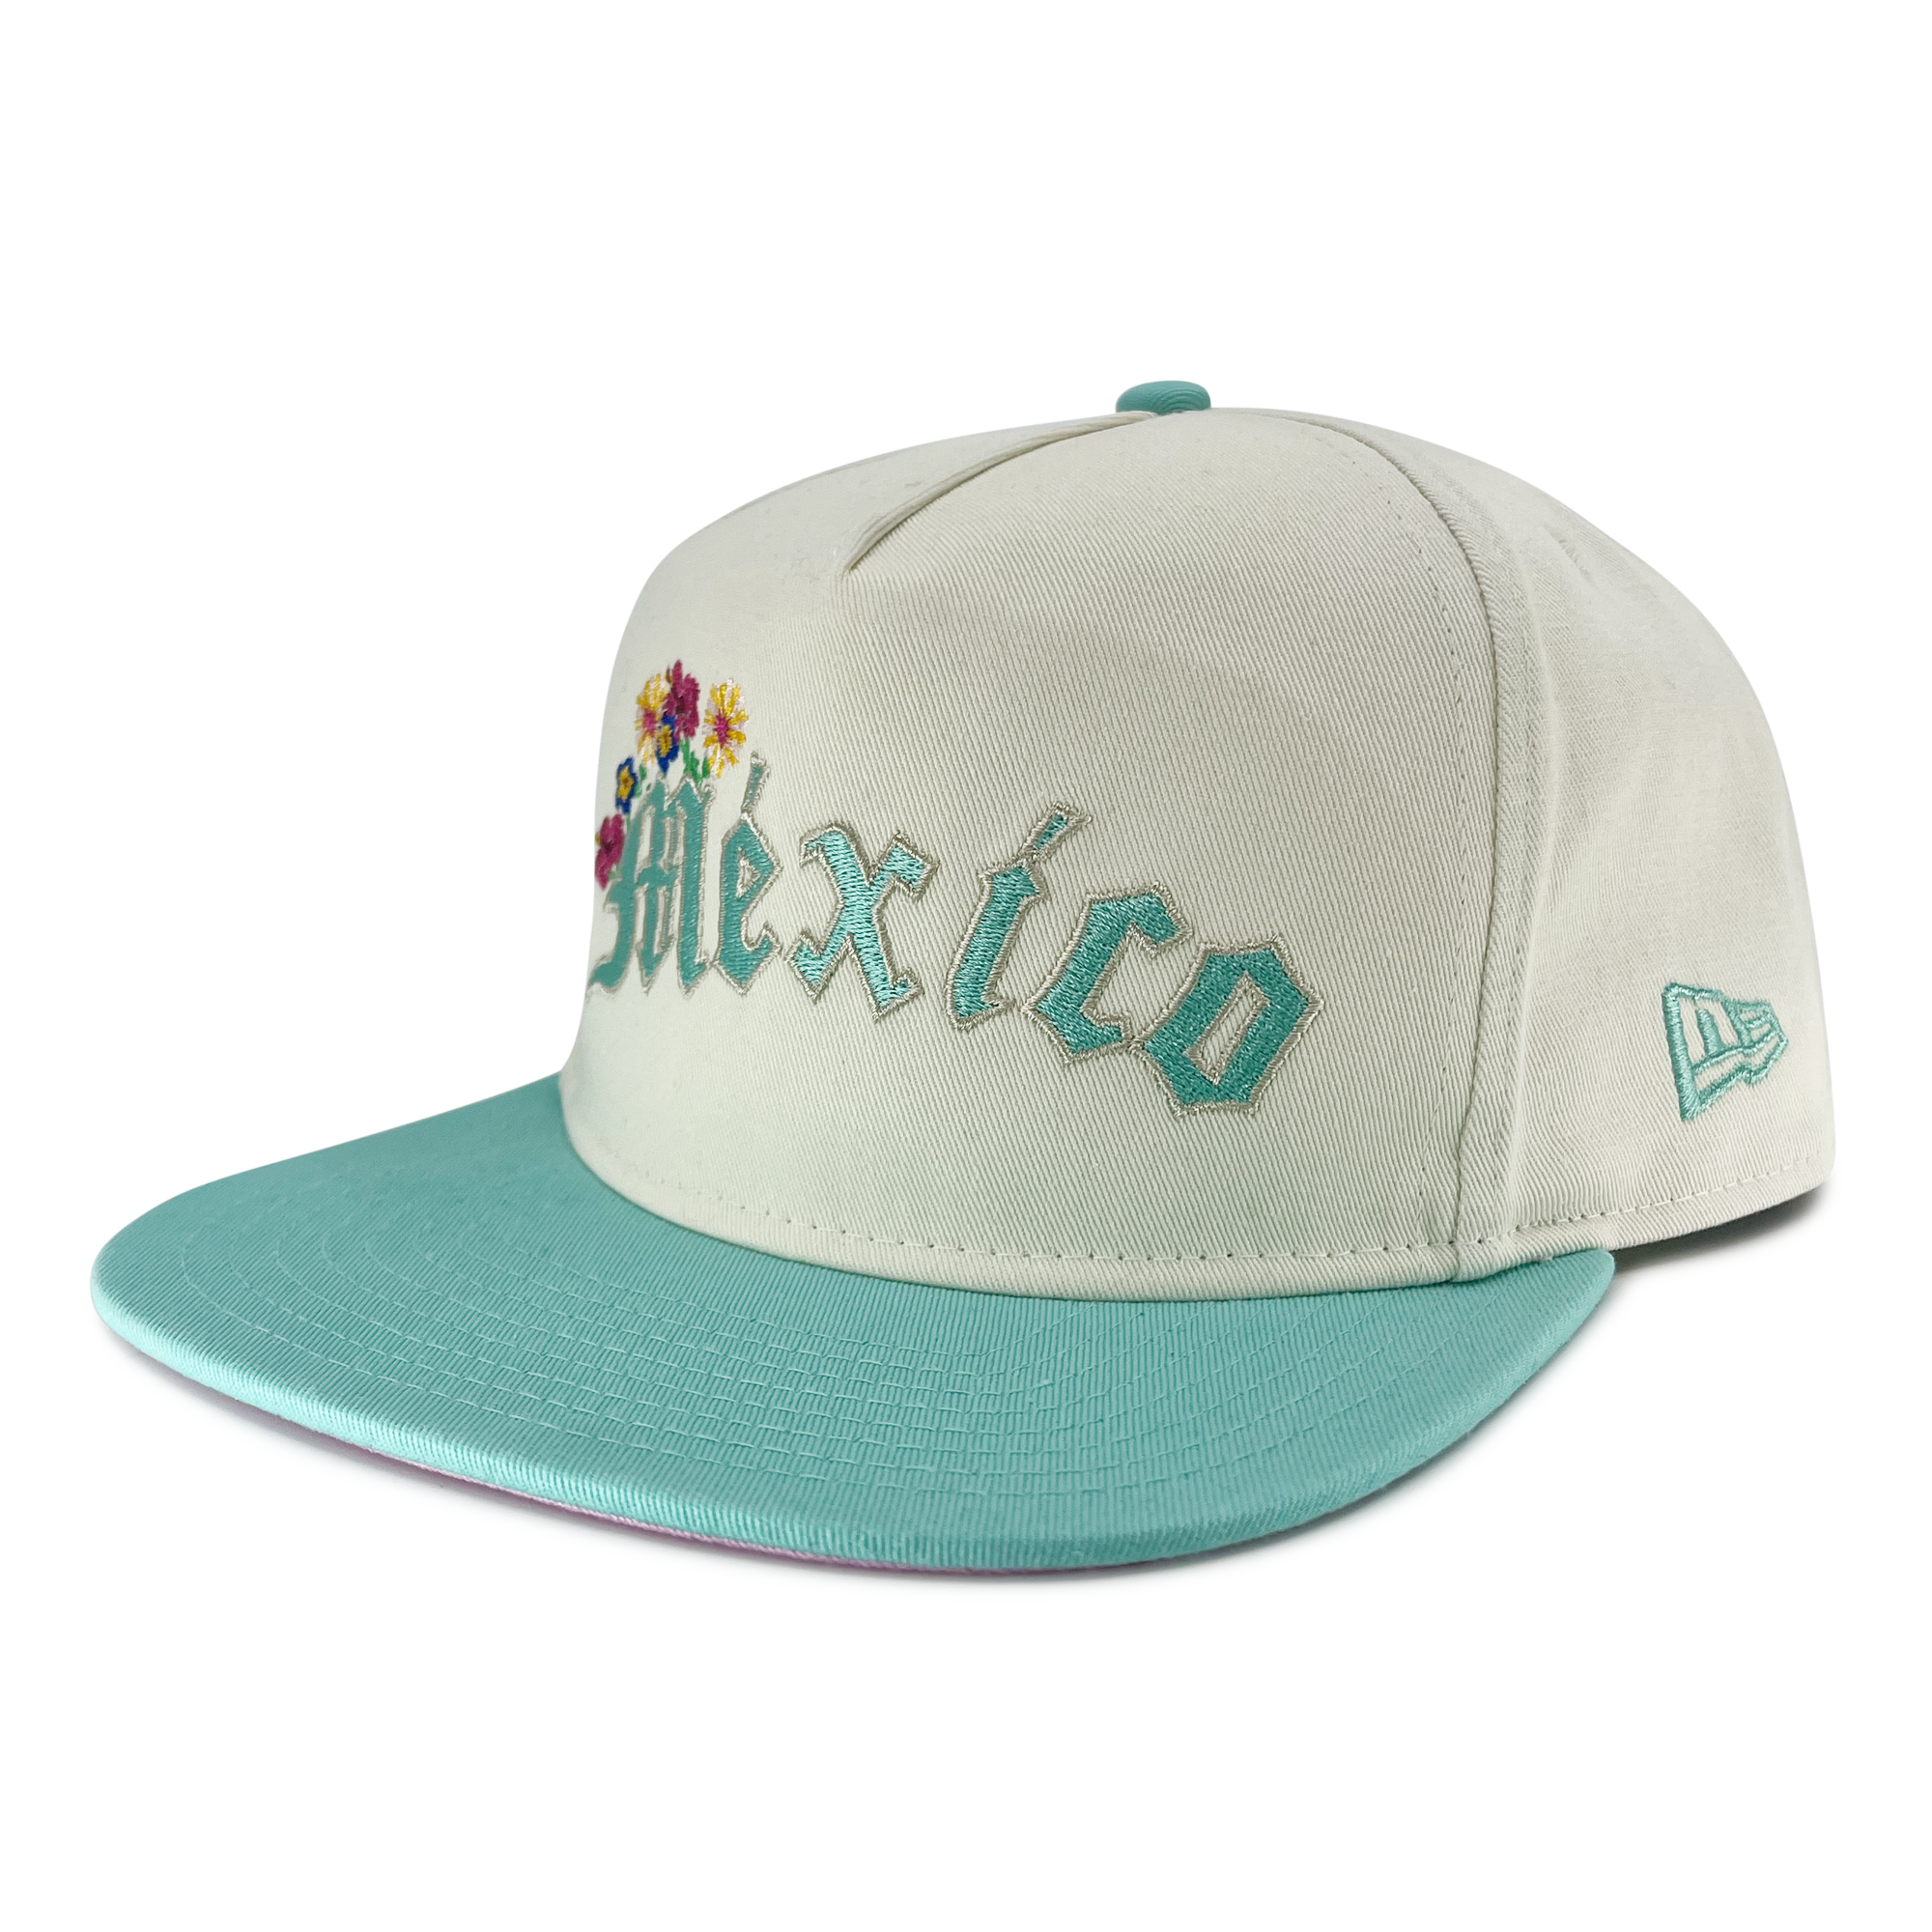 New Era Mexico Golfer Cap